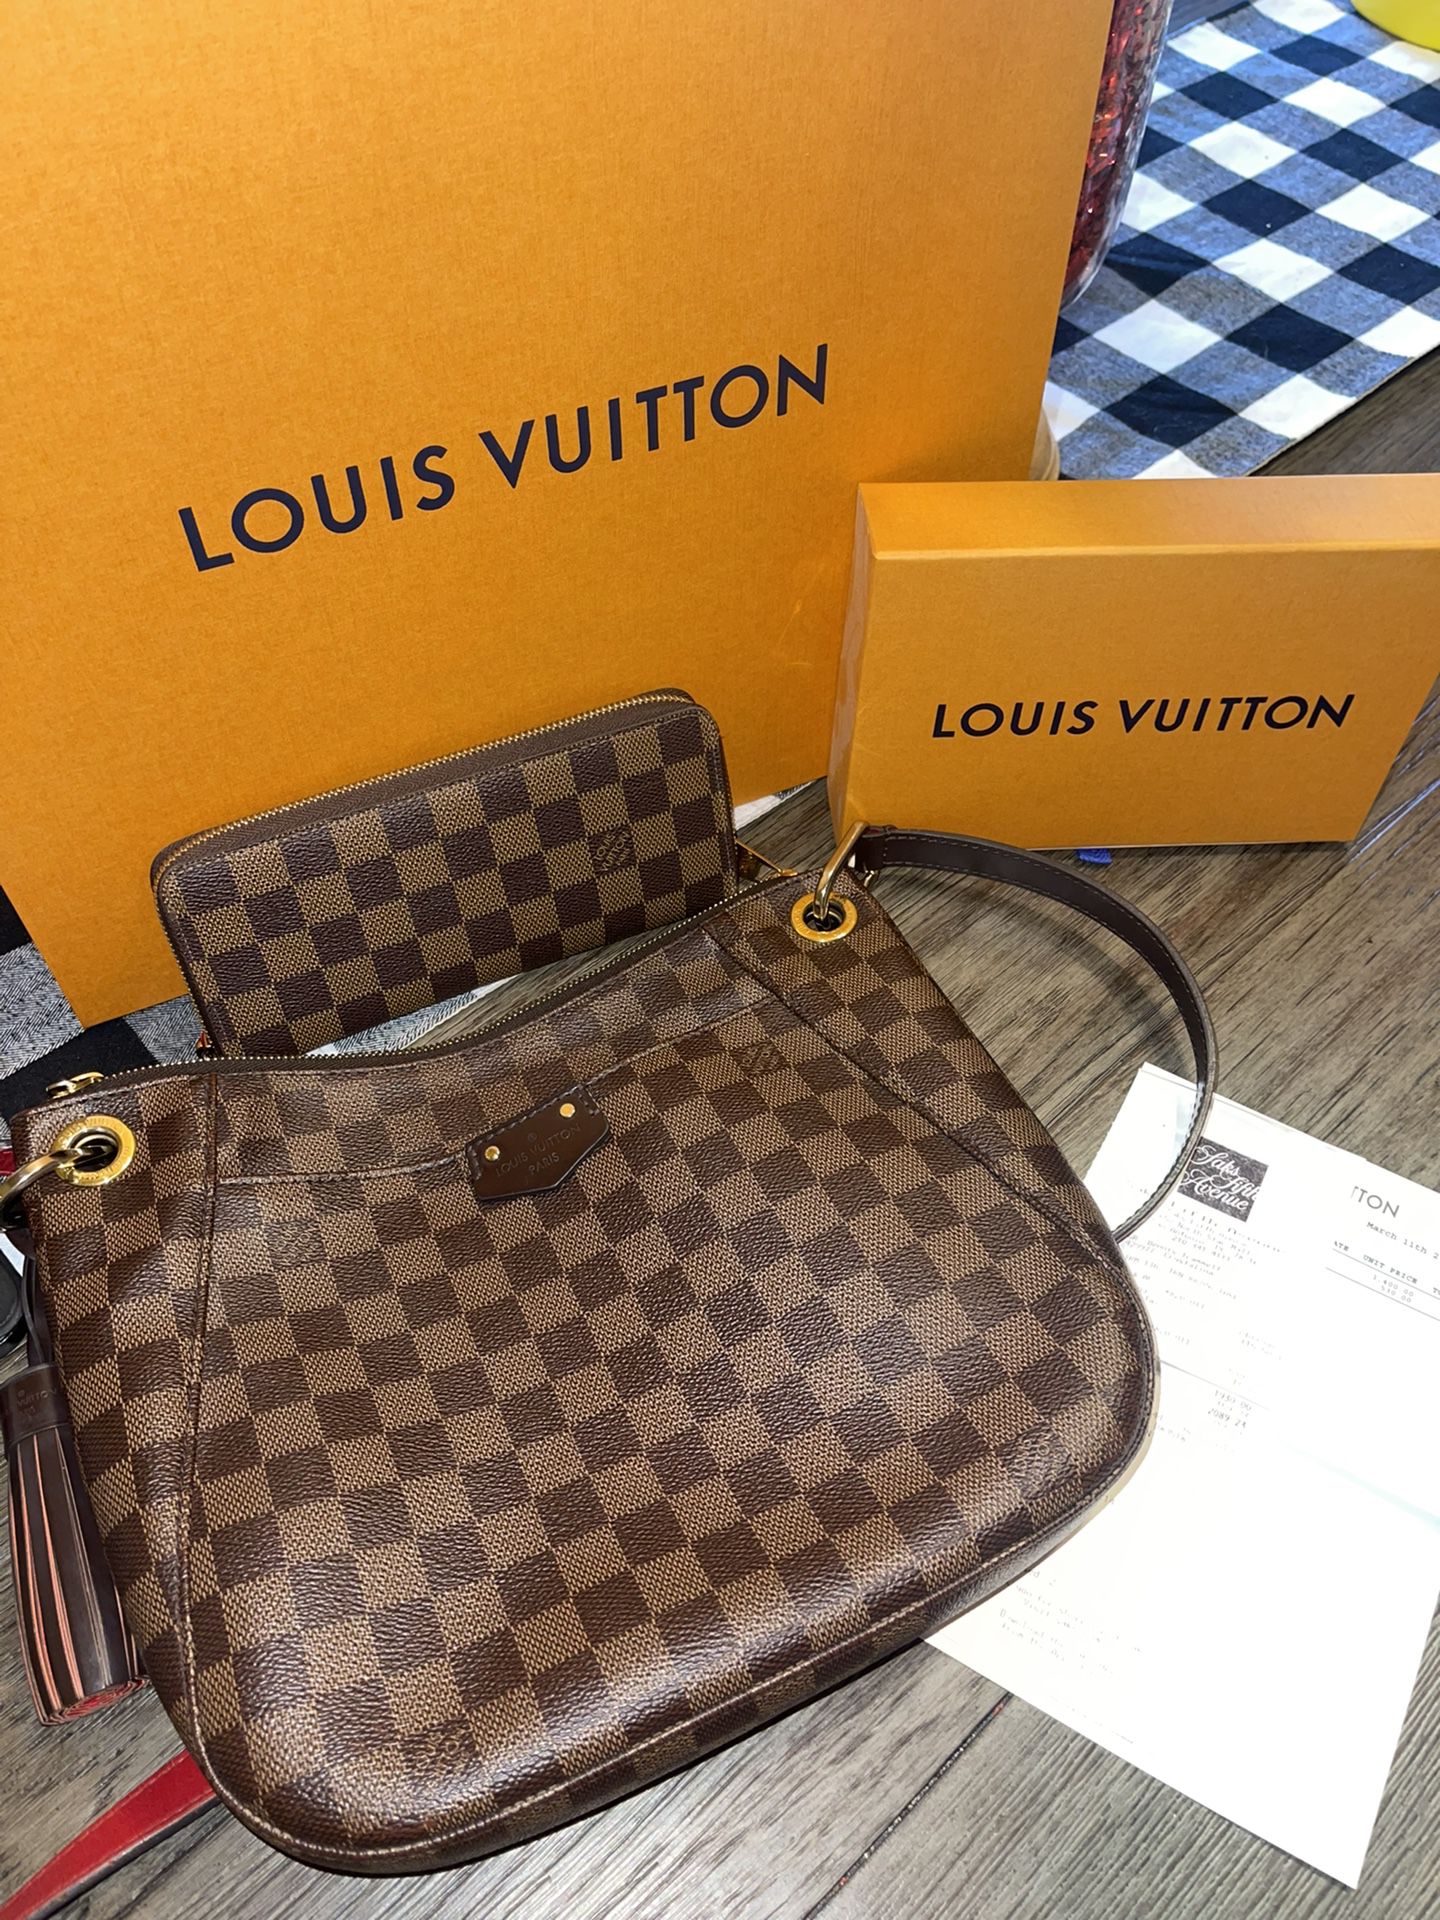 Louis Vuitton for Sale in San Antonio, TX - OfferUp